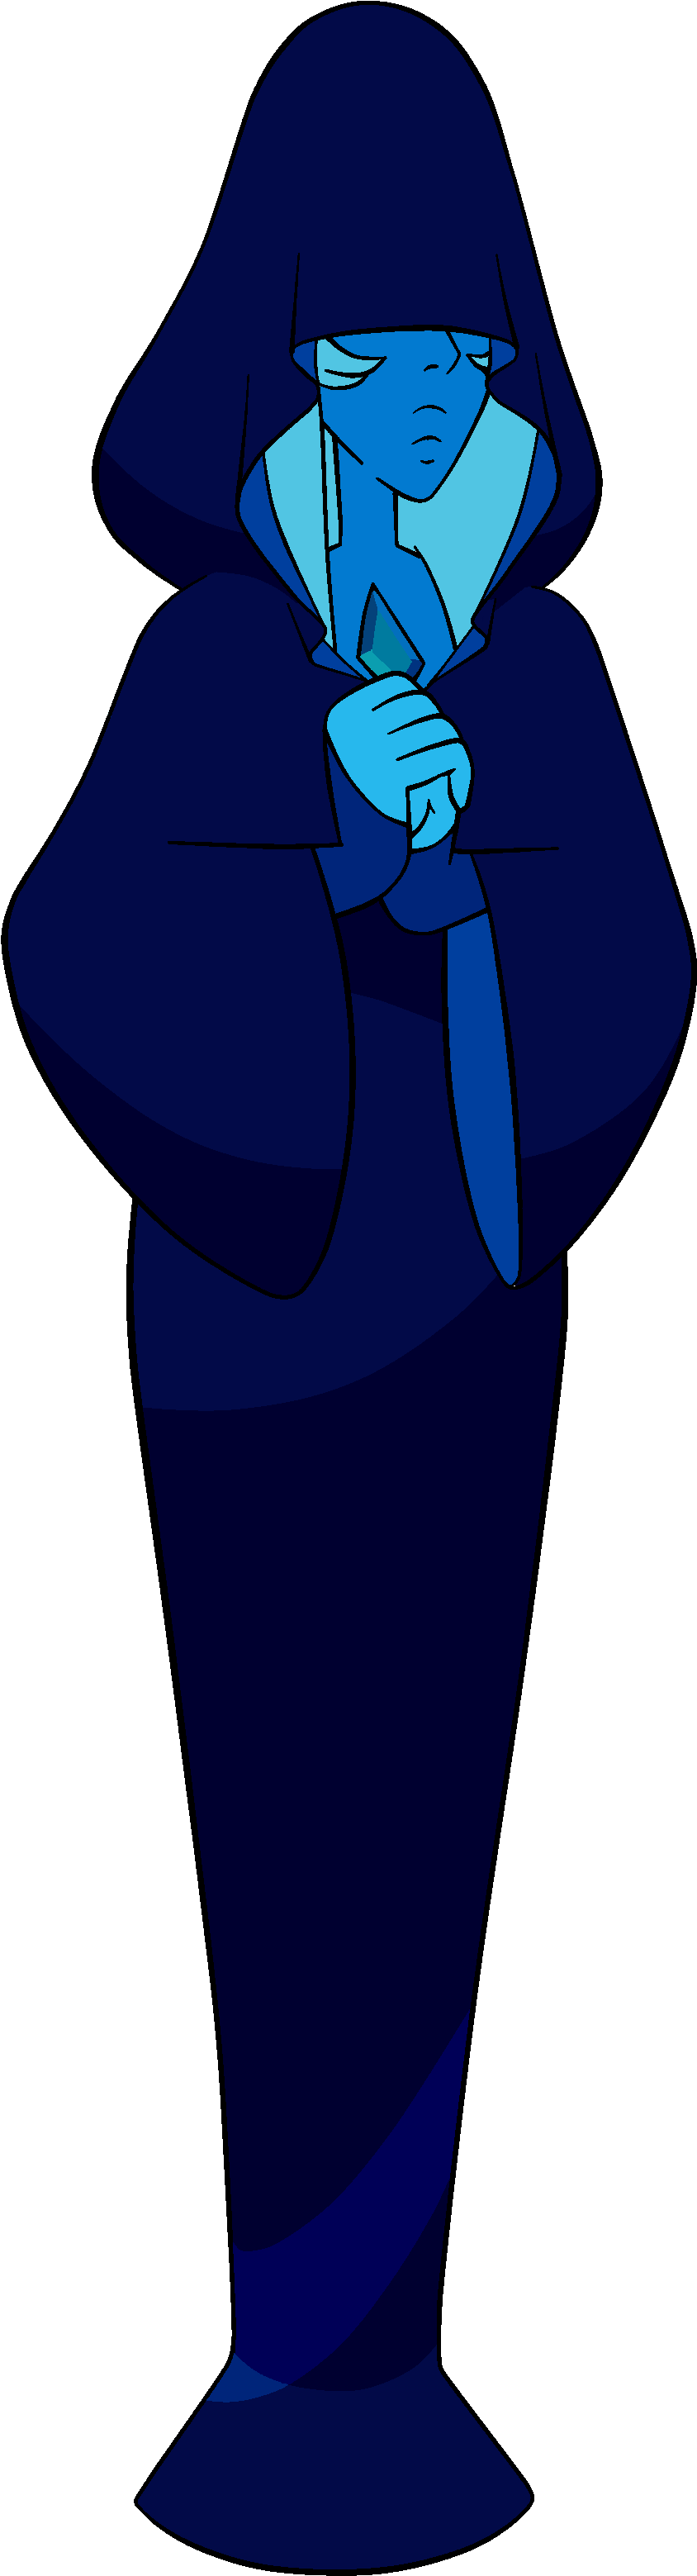 Unhooded - Hooded - Blue Diamond Steven Universo (1047x3200)